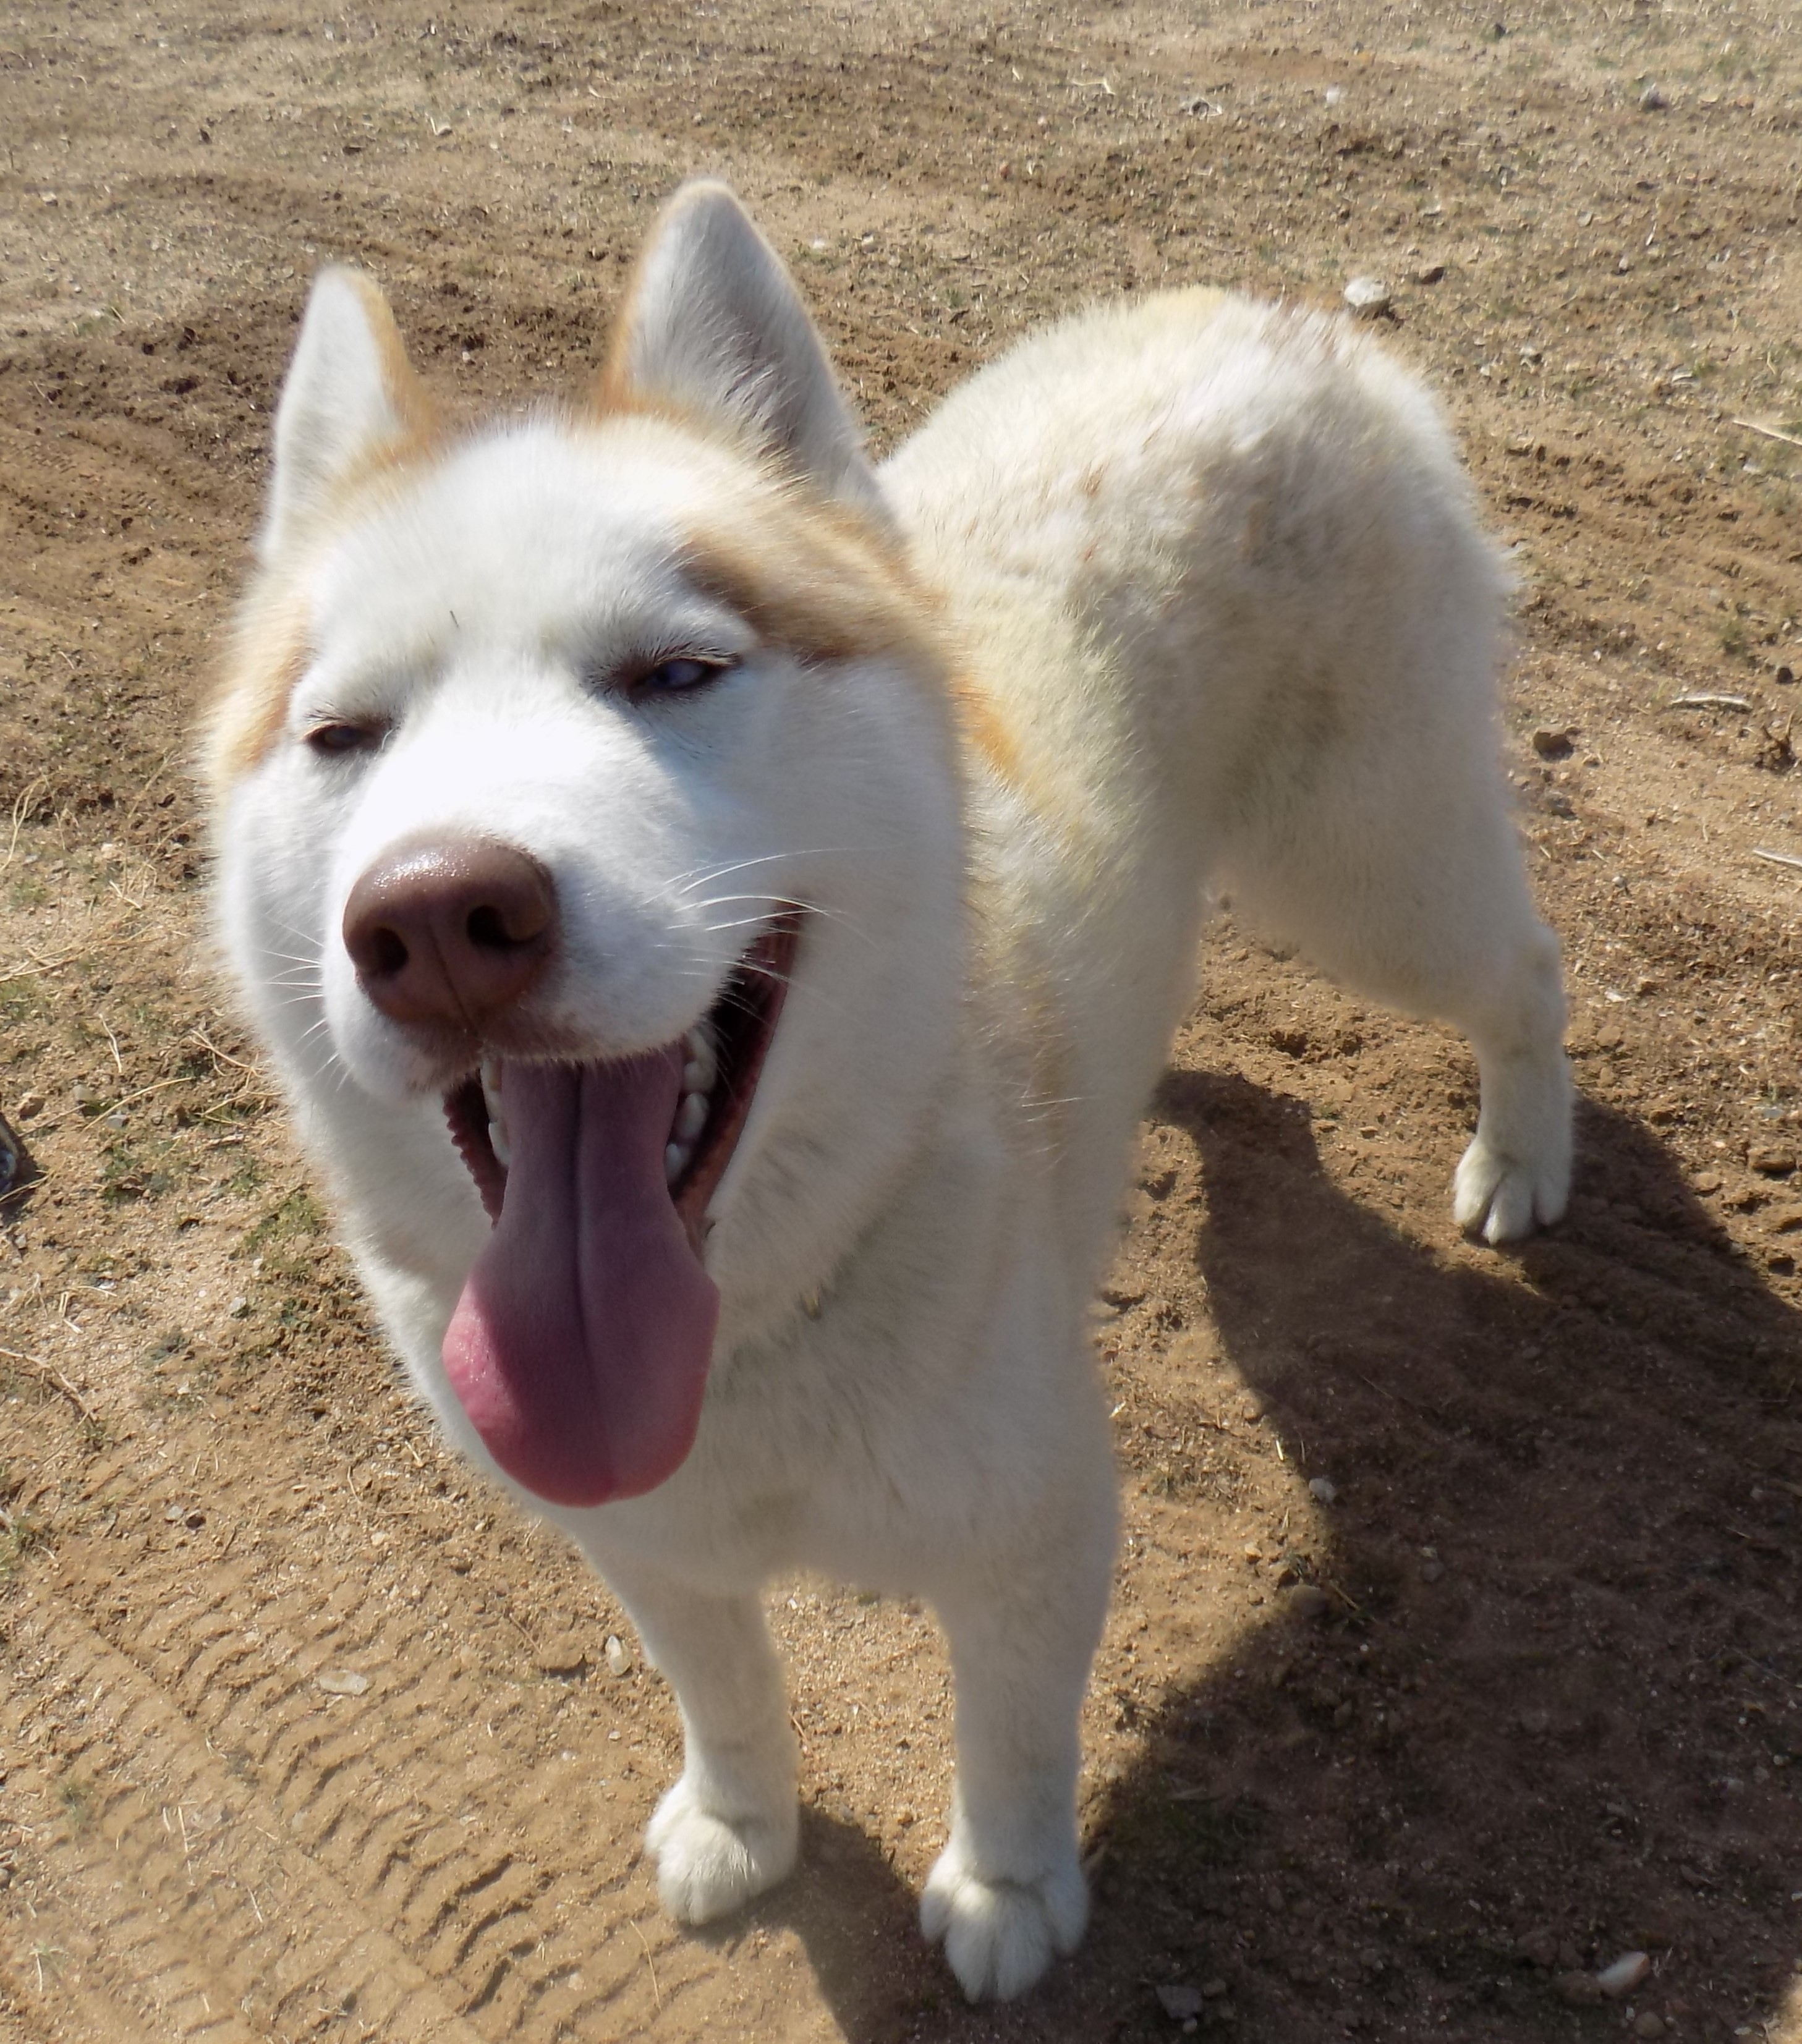 CINNAMON, an adoptable Siberian Husky in Valencia, CA, 91355 | Photo Image 3